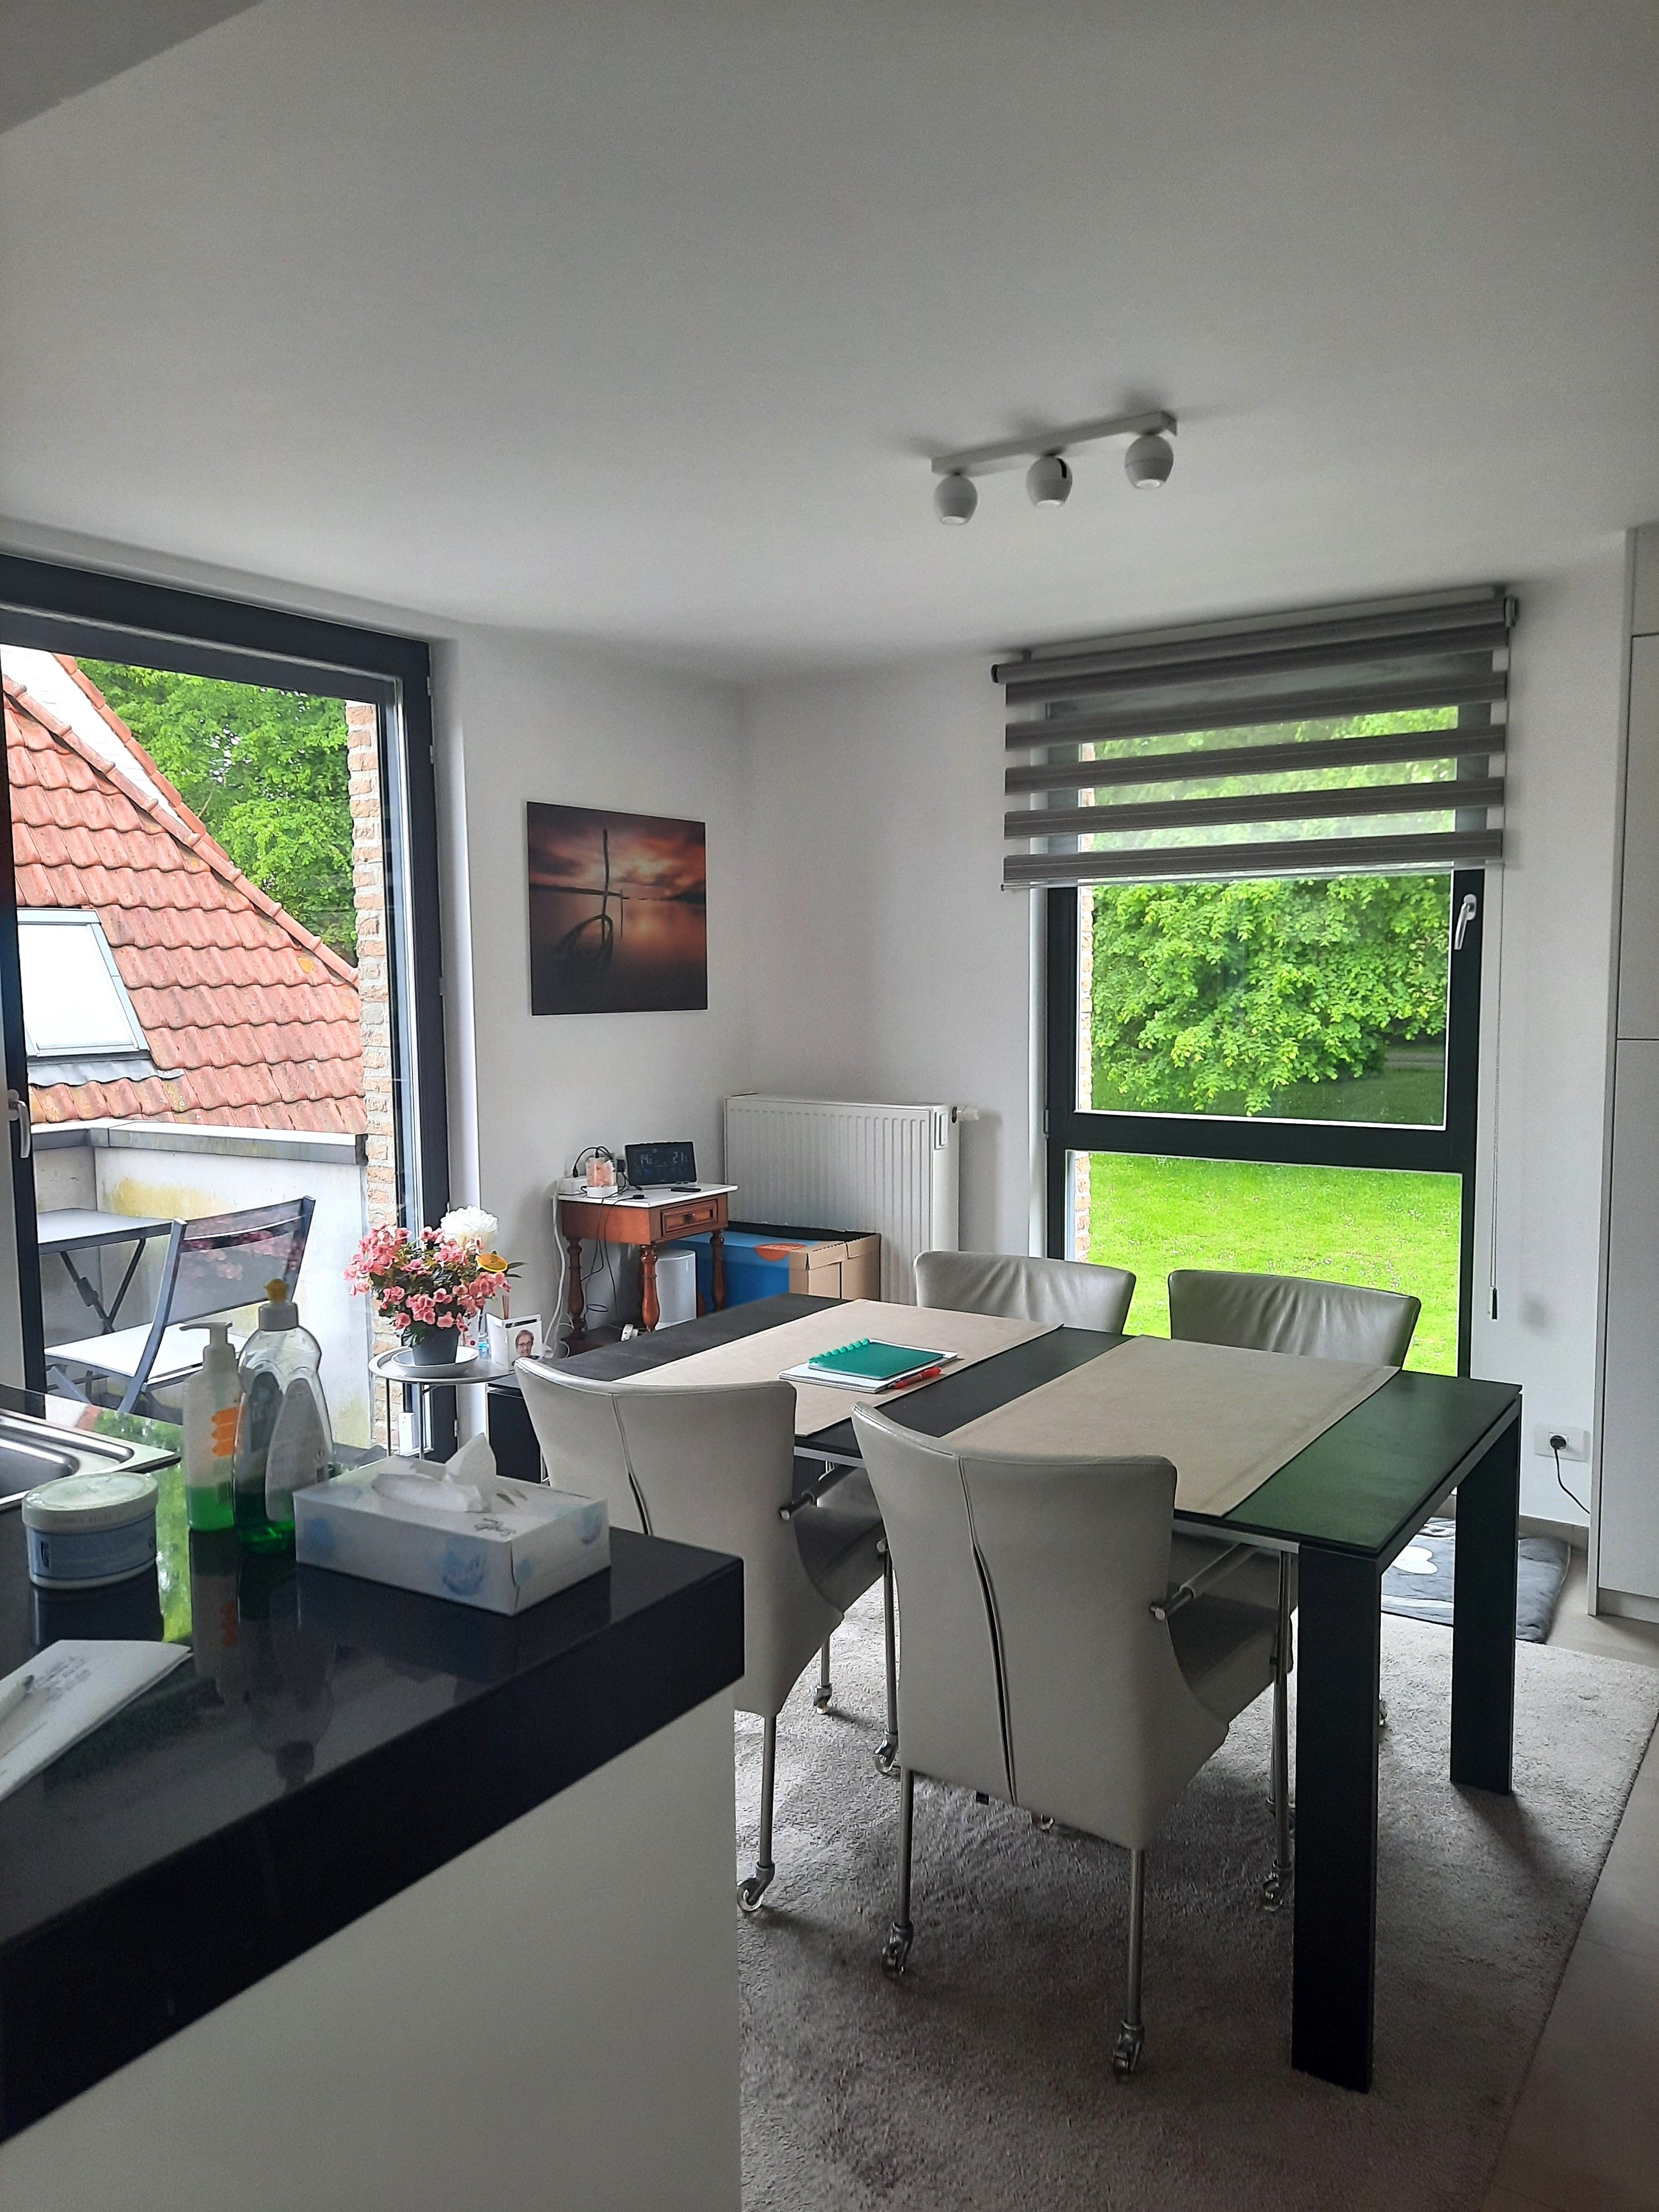 Appartement te huur Katelijnevest 16 - 8000 Brugge